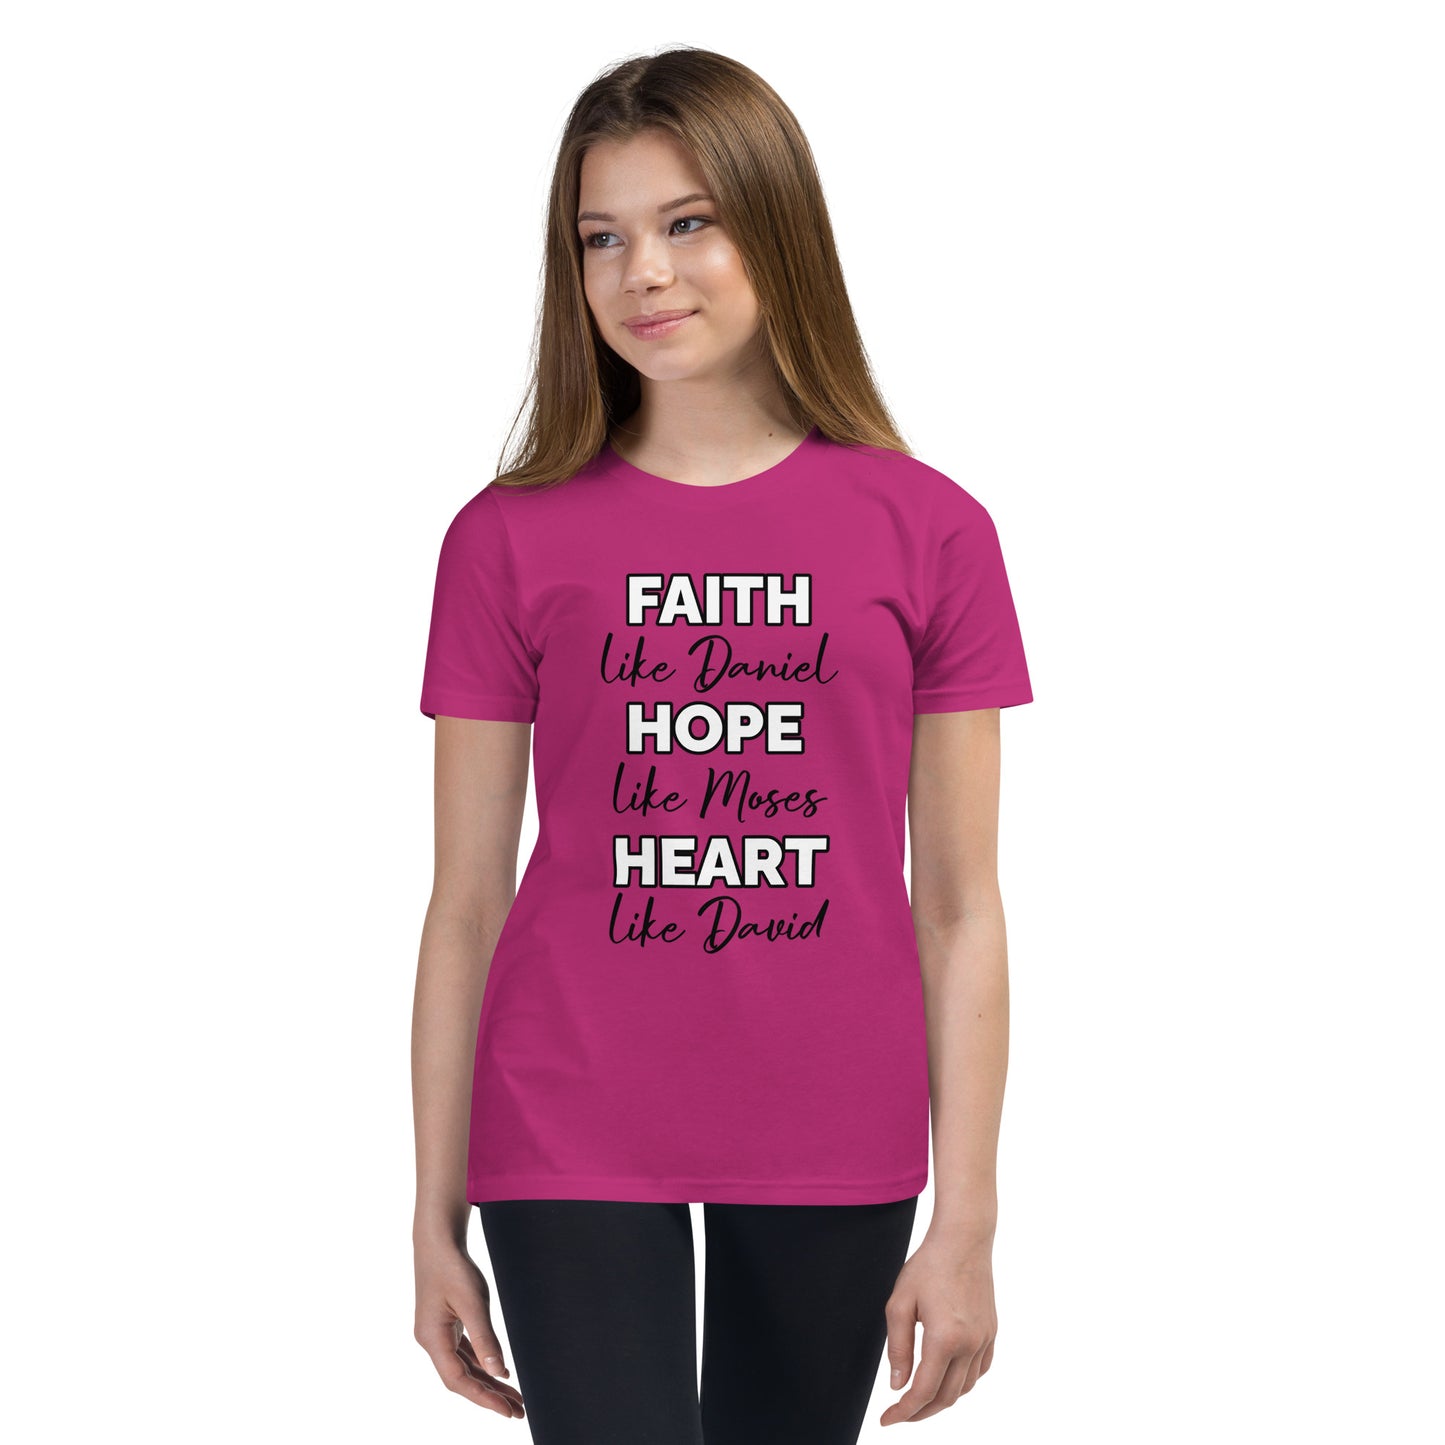 Faith Like Daniel Youth Short Sleeve T-Shirt